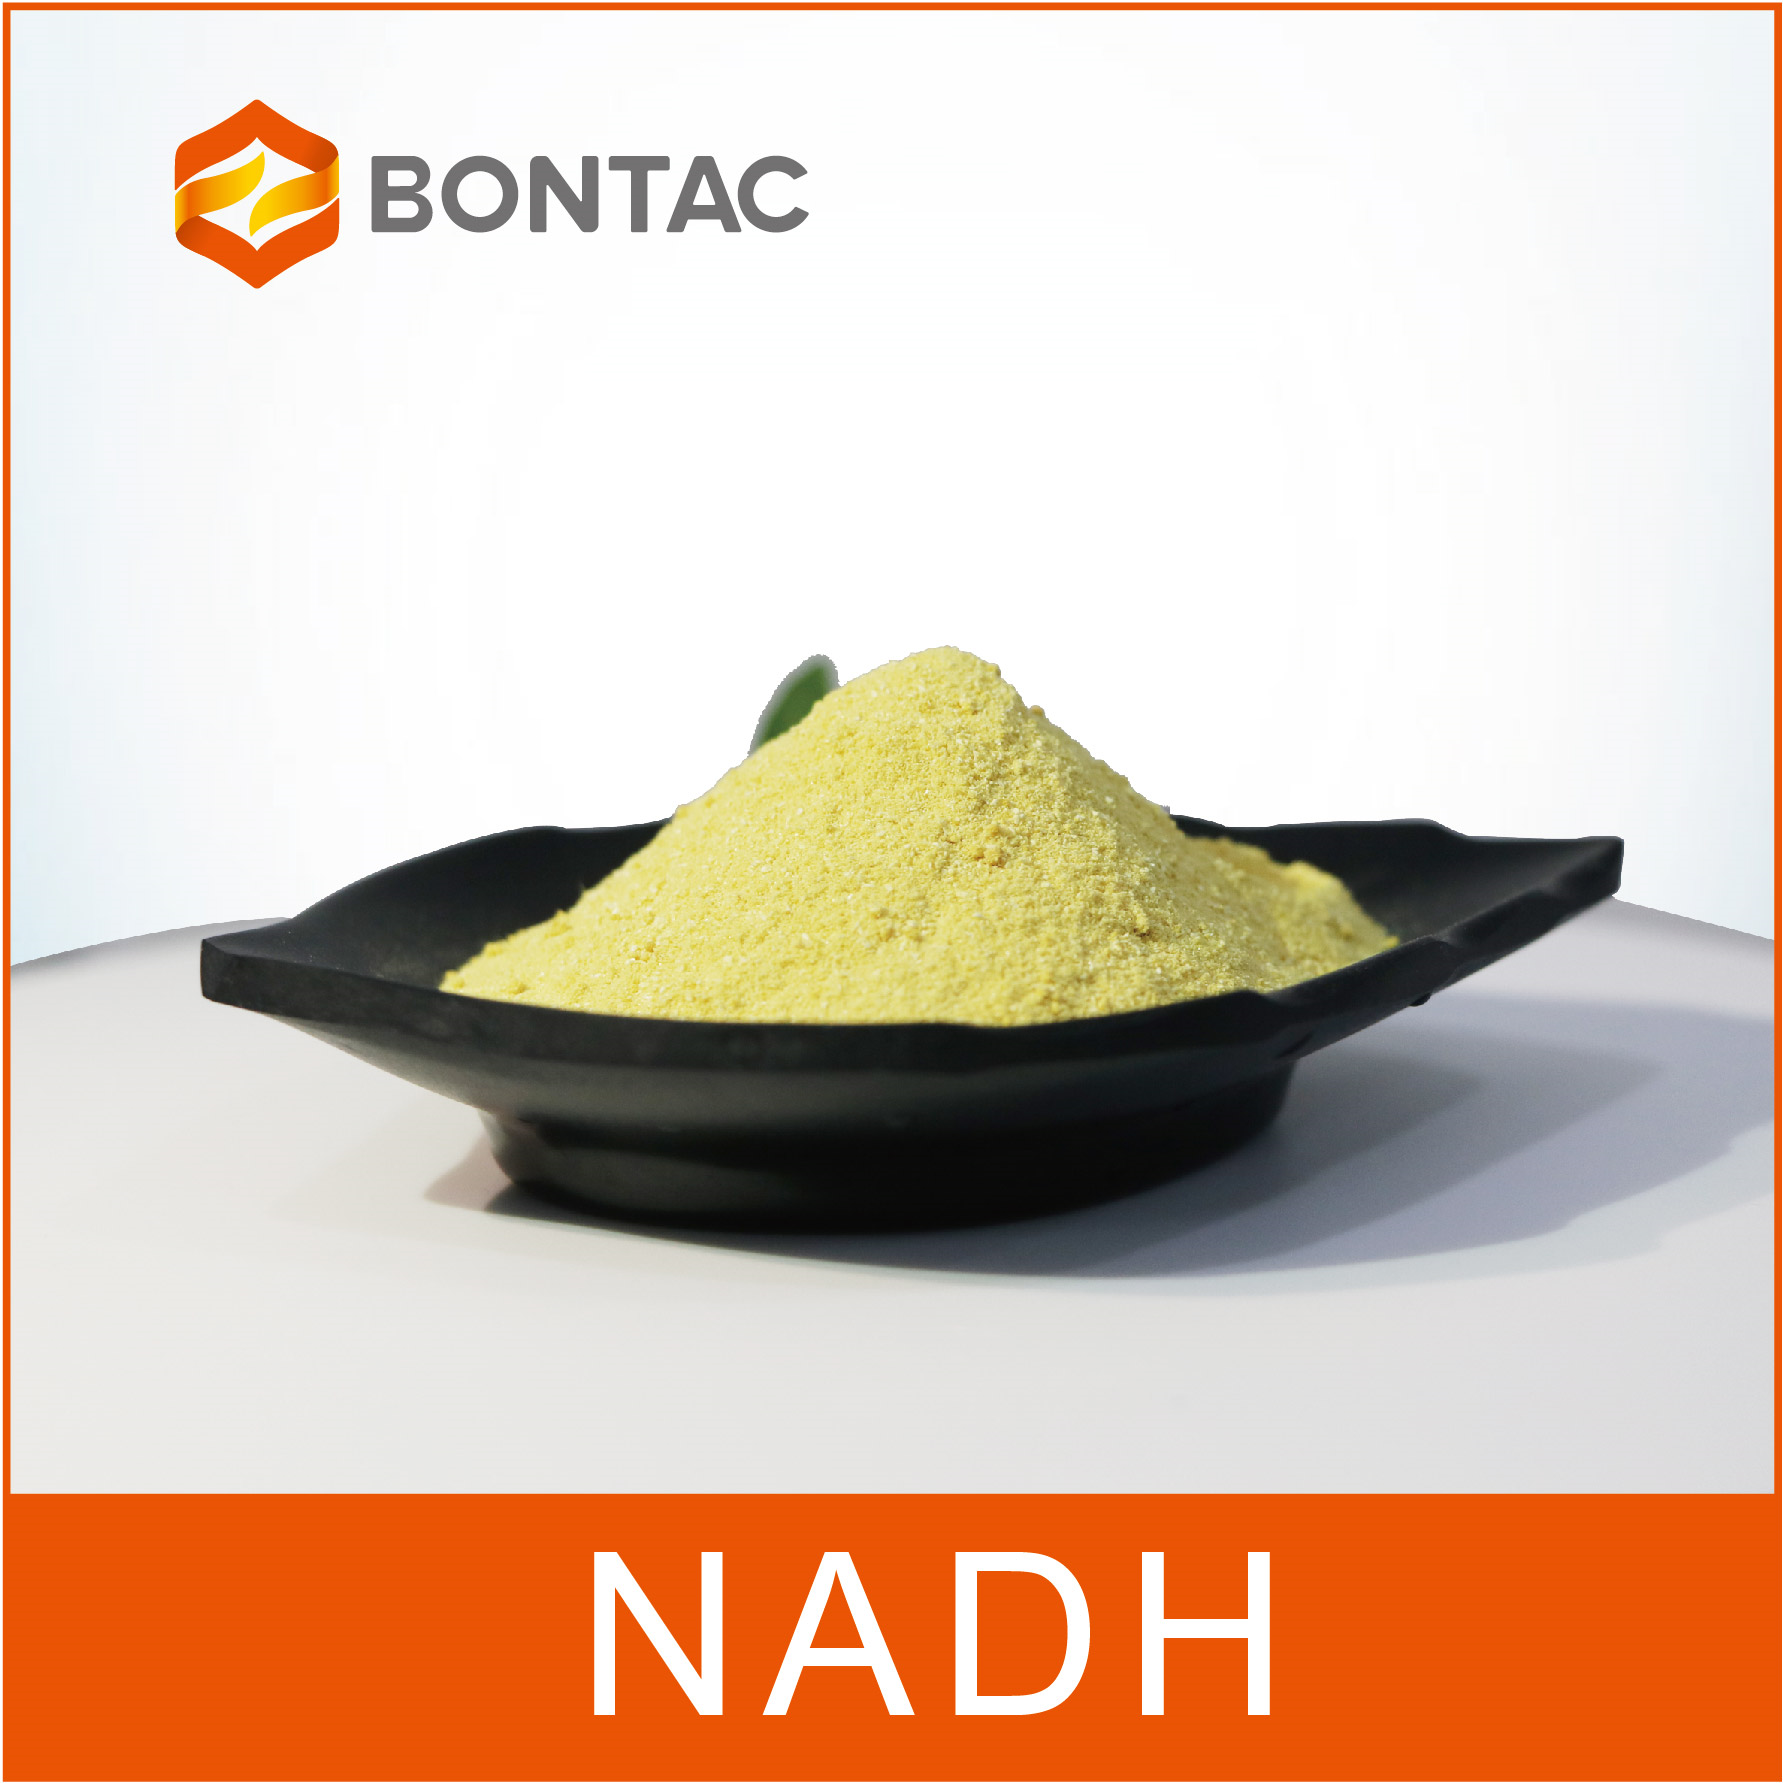 NADH β-nicotinamide adenine dinucleotide (reduced form)